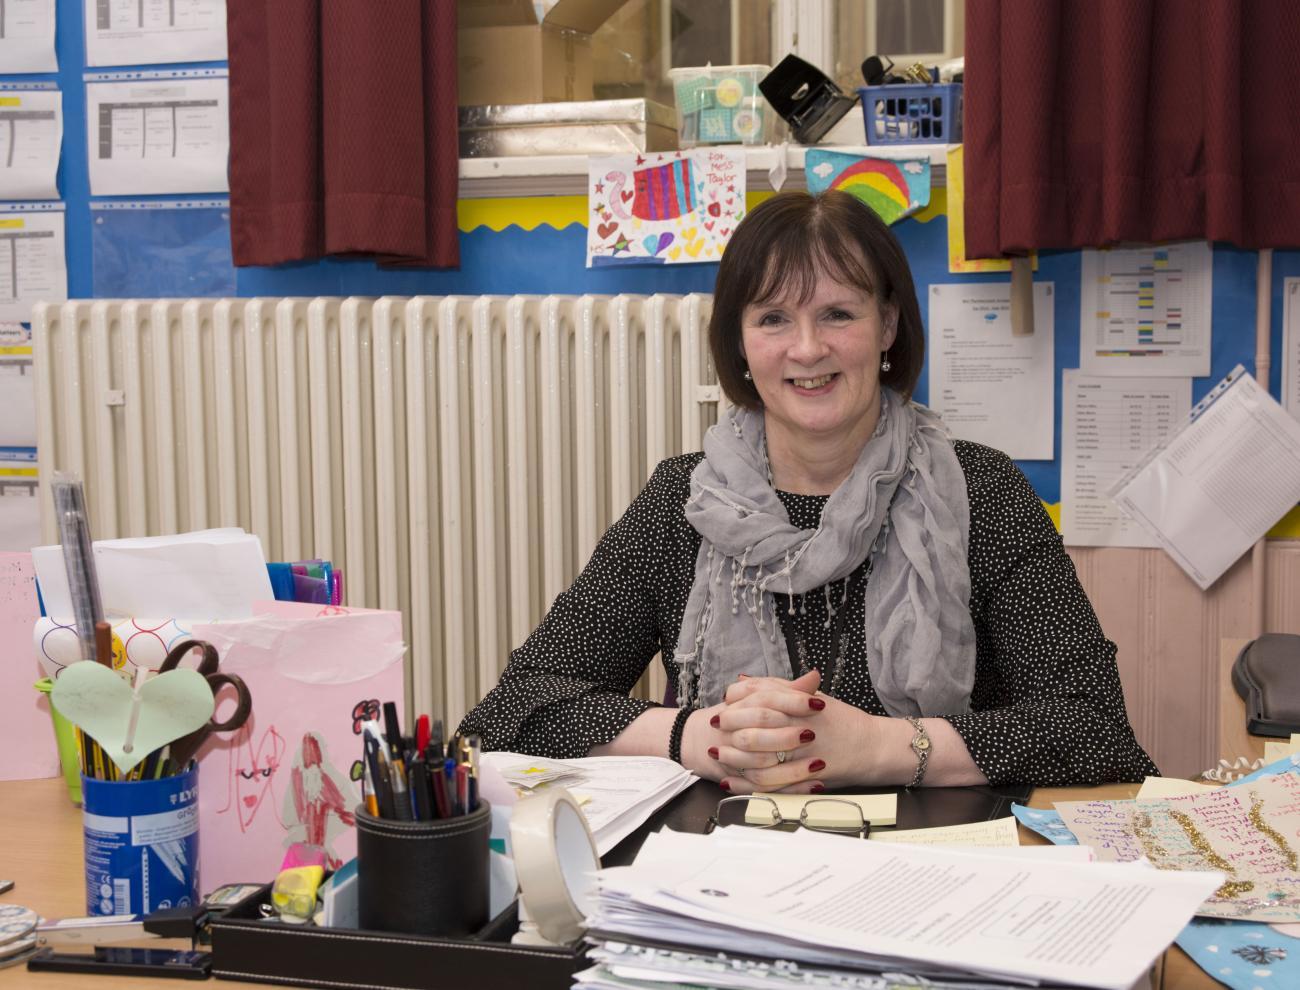 Shirley Taylor, Head Teacher, Annette St Primary School